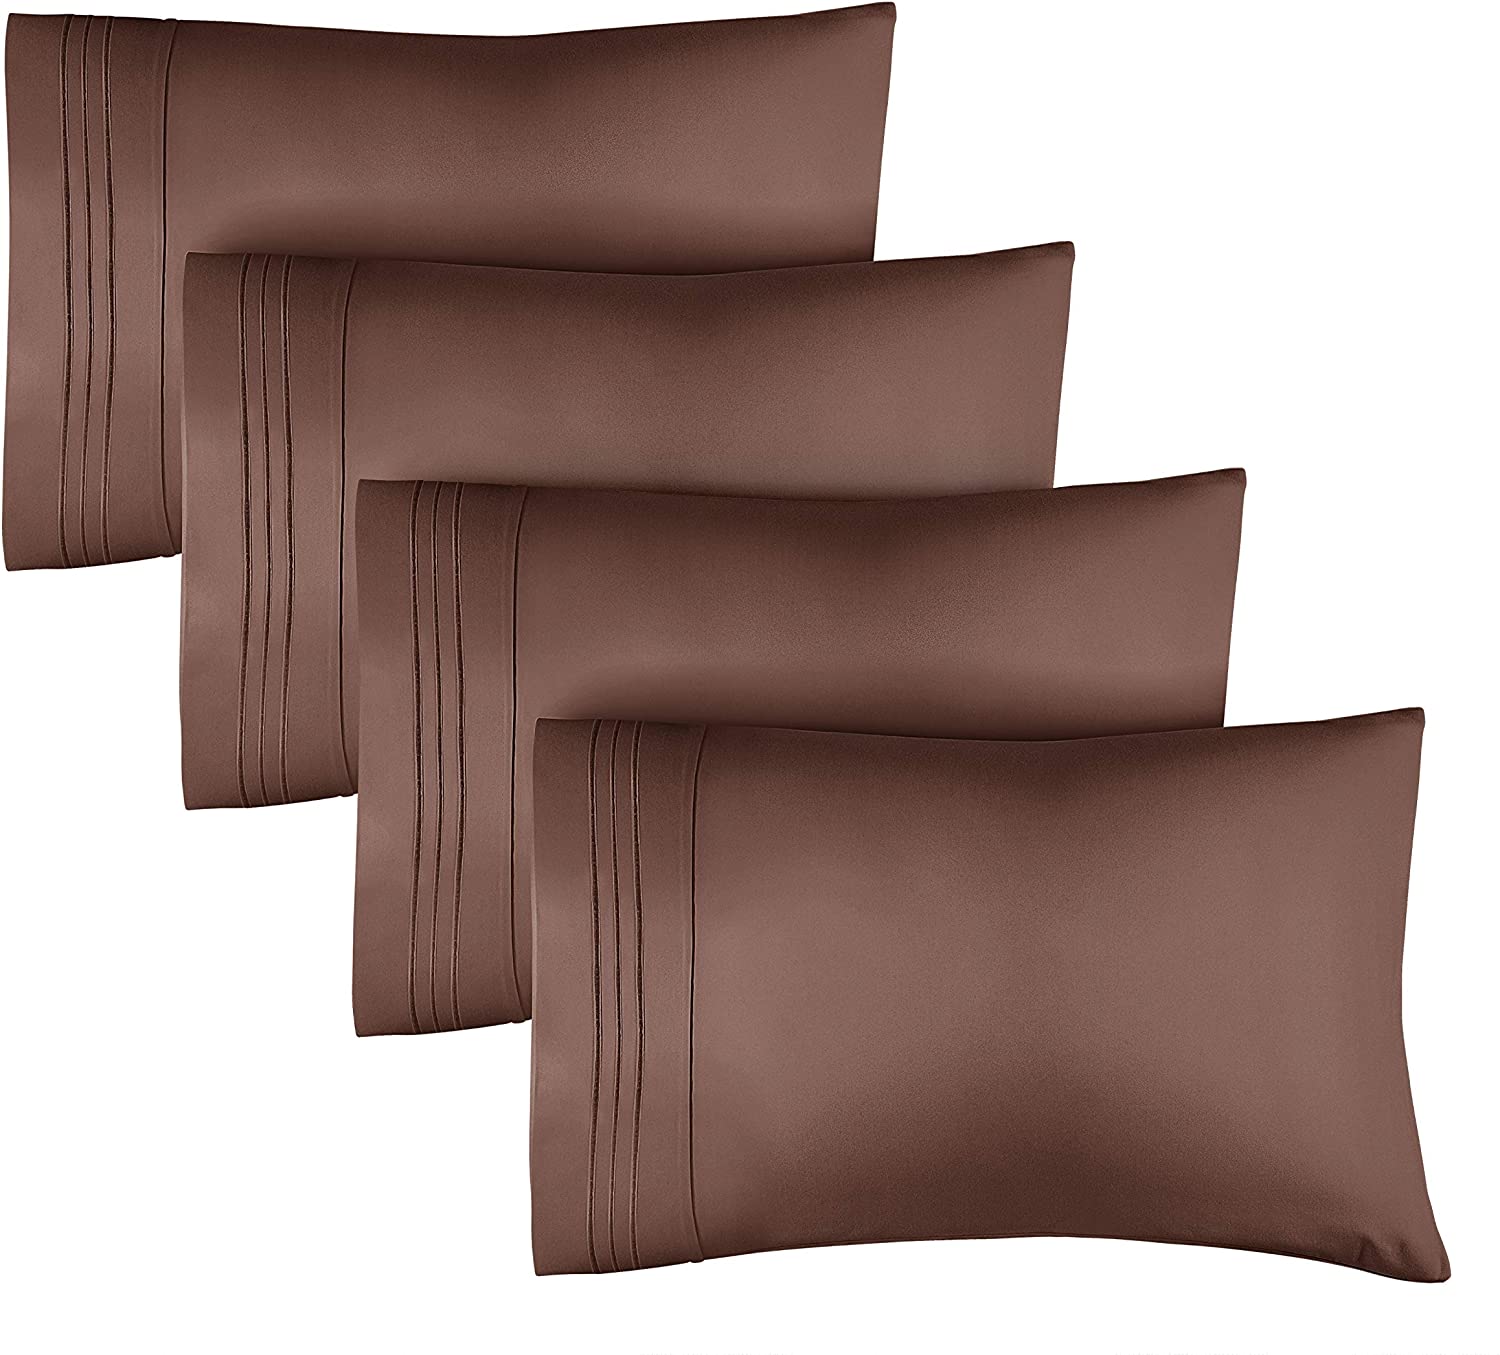 4 Pillowcase Set - Brown